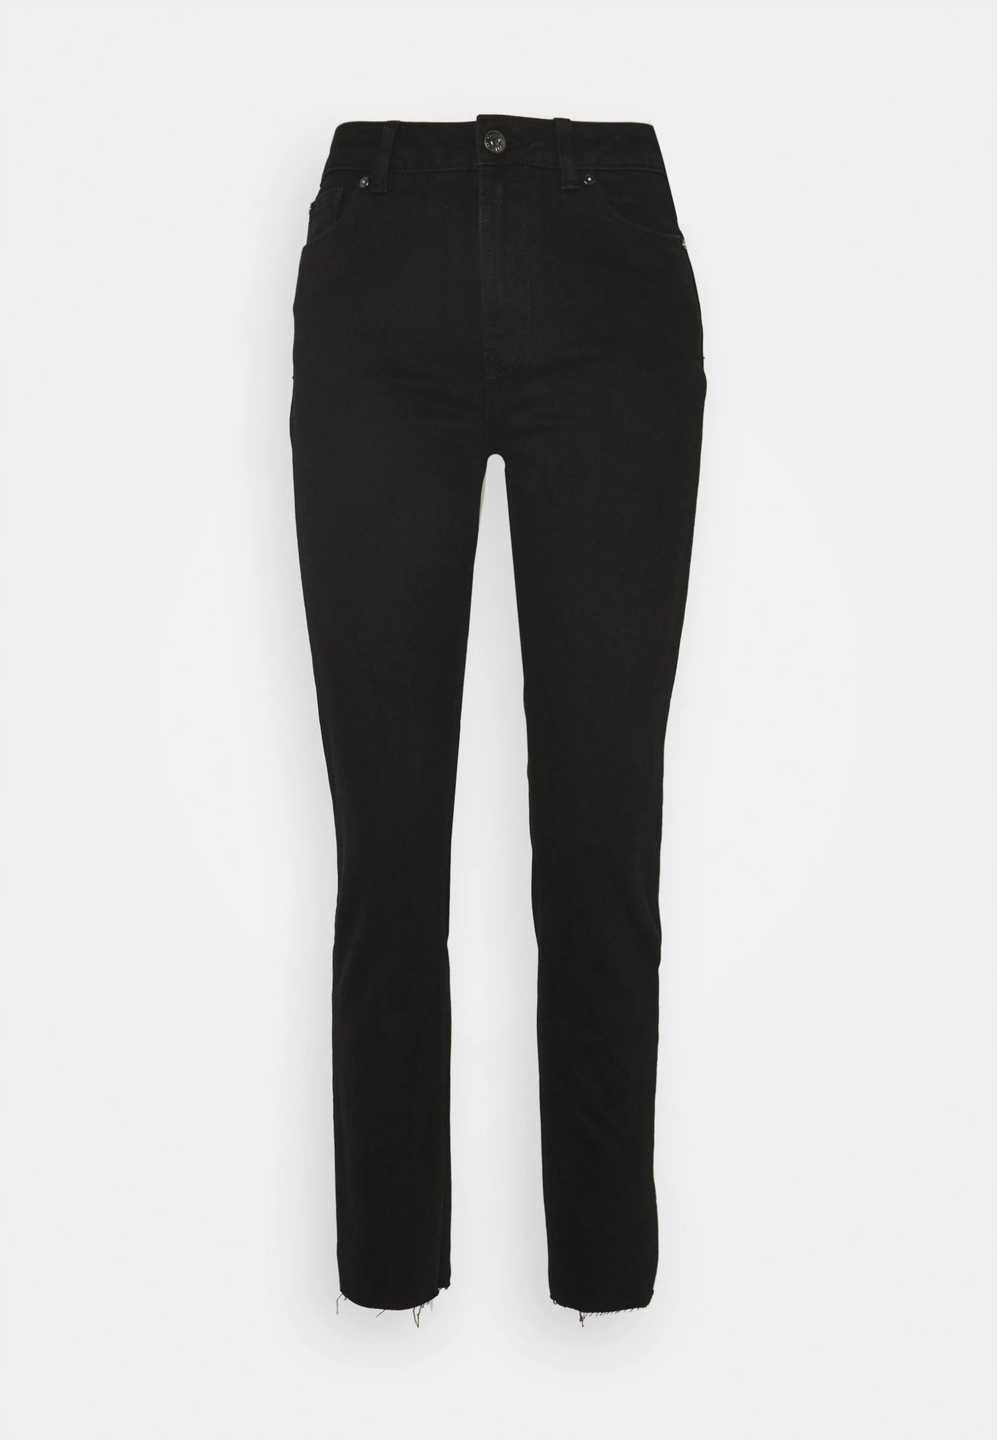 Spodnie jeansy damskie - ONLY - rozm 29/30 (OM19)